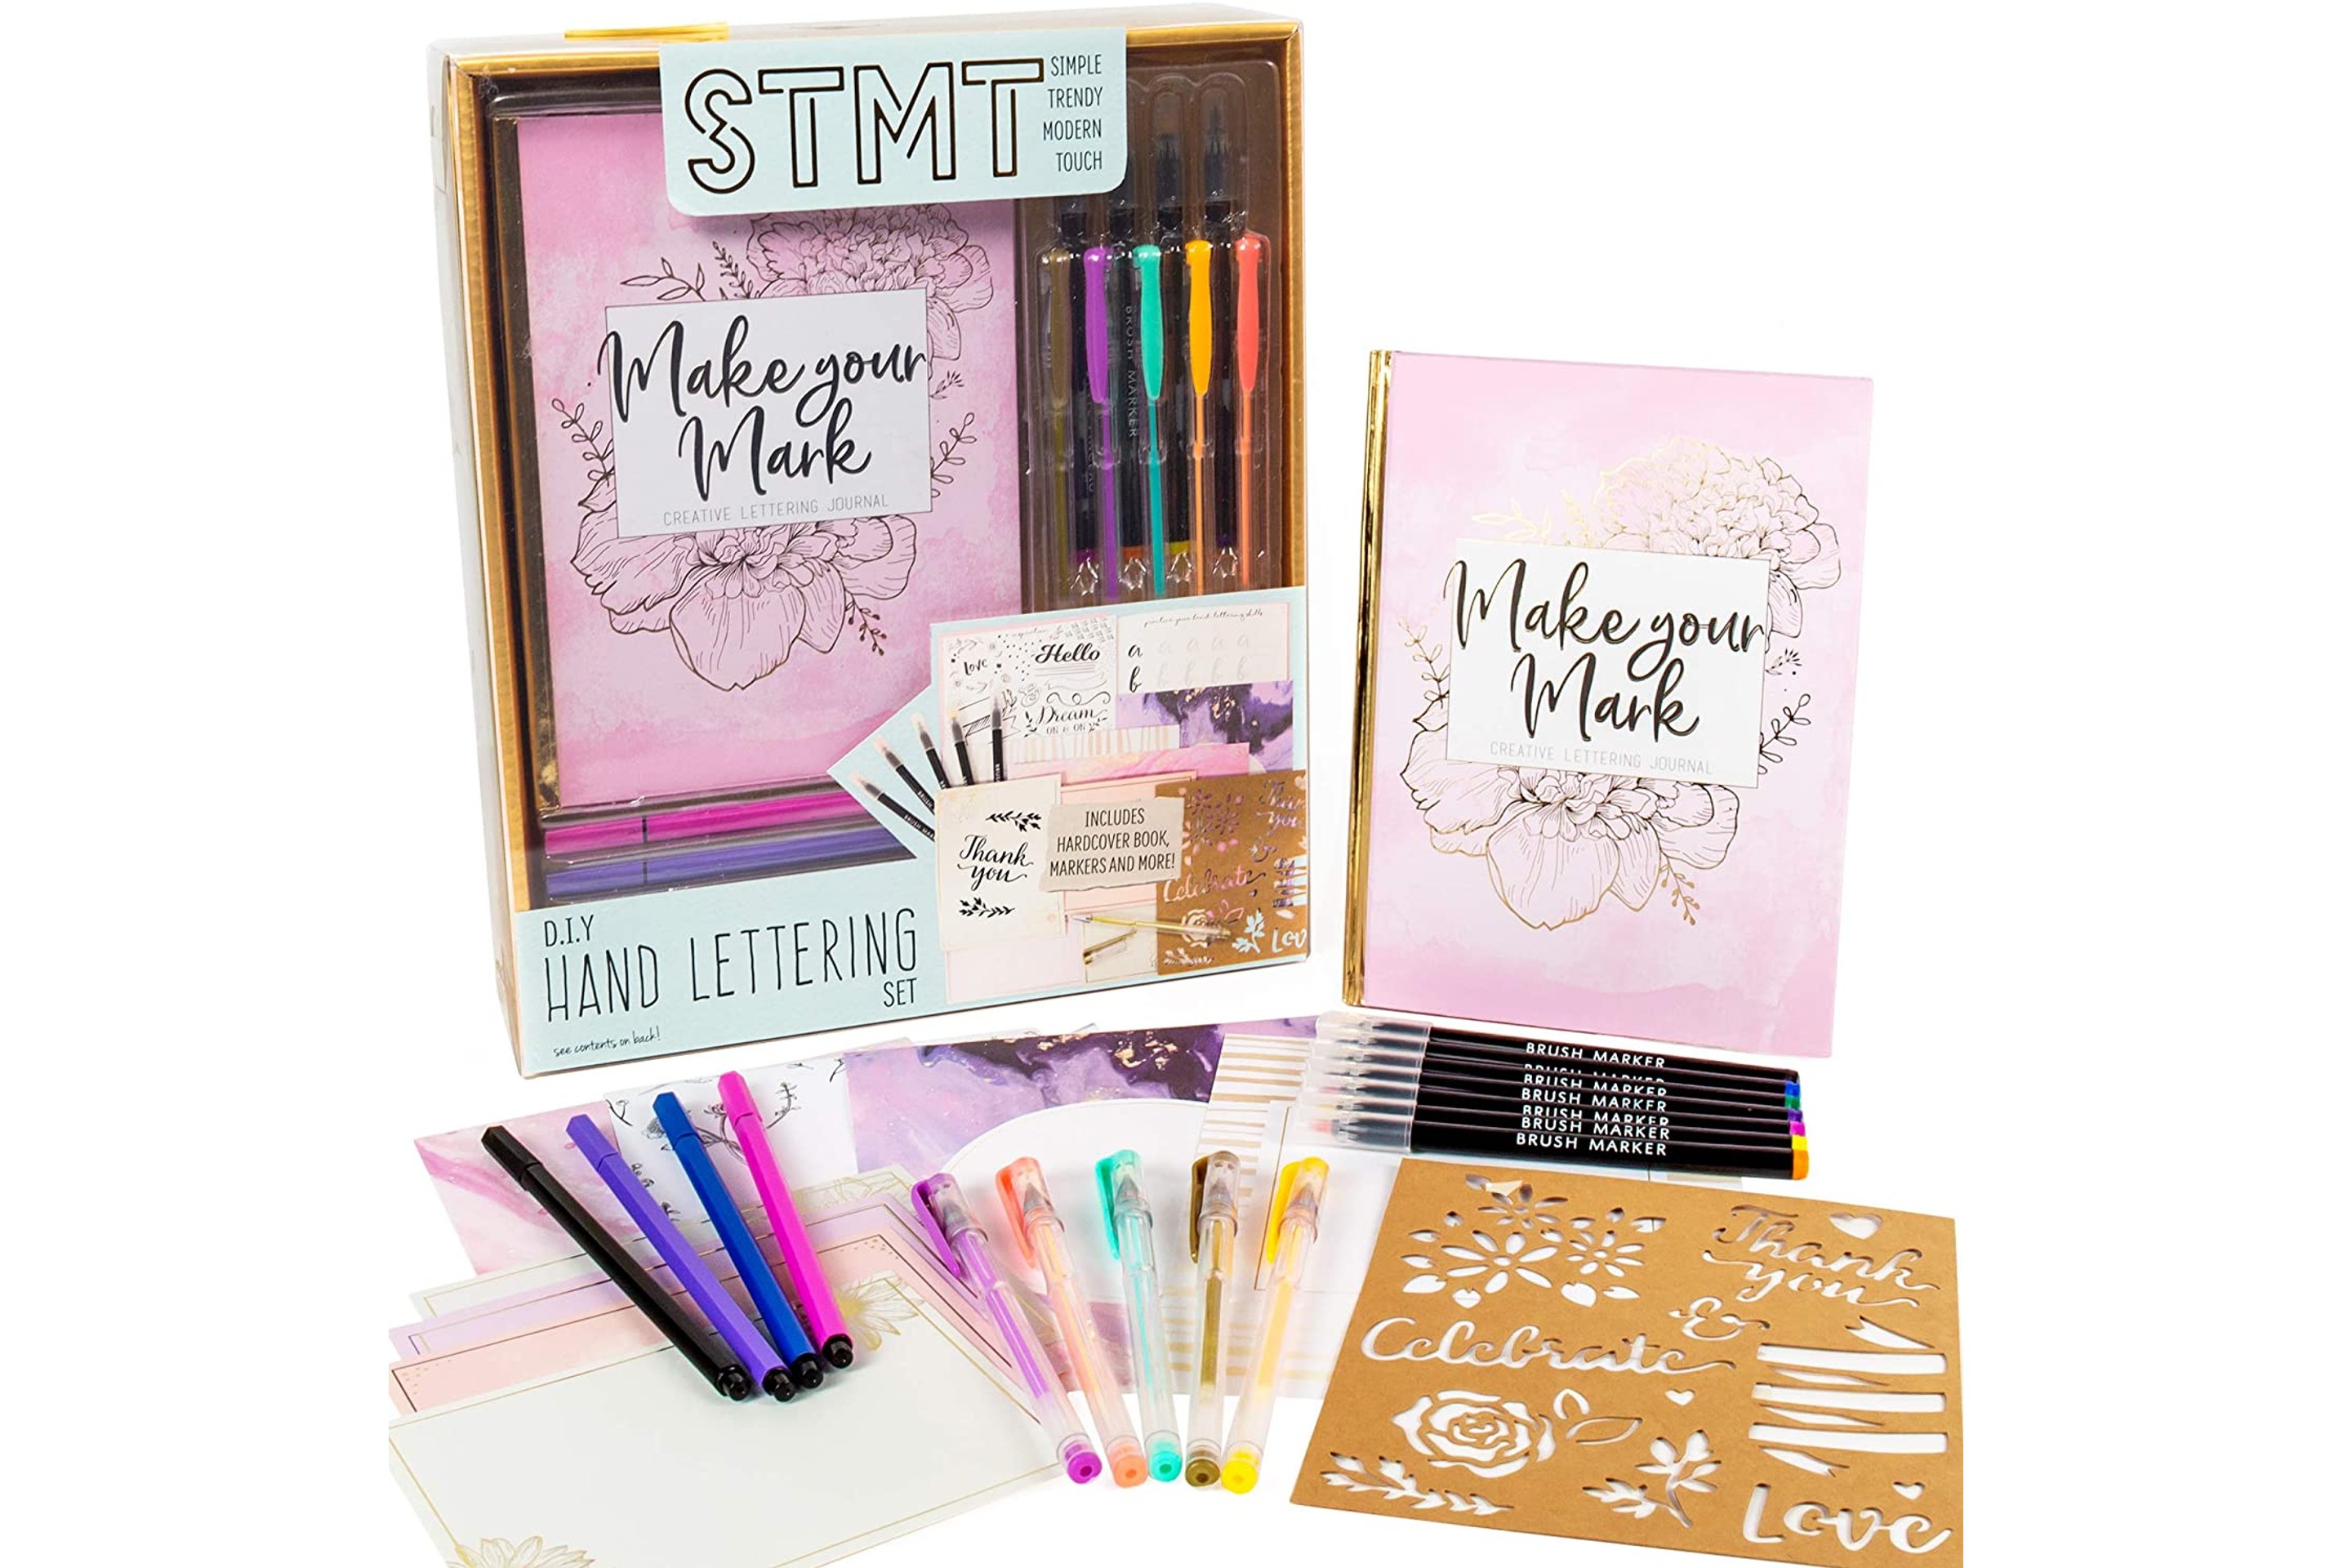 STMT Hand Lettering Kit